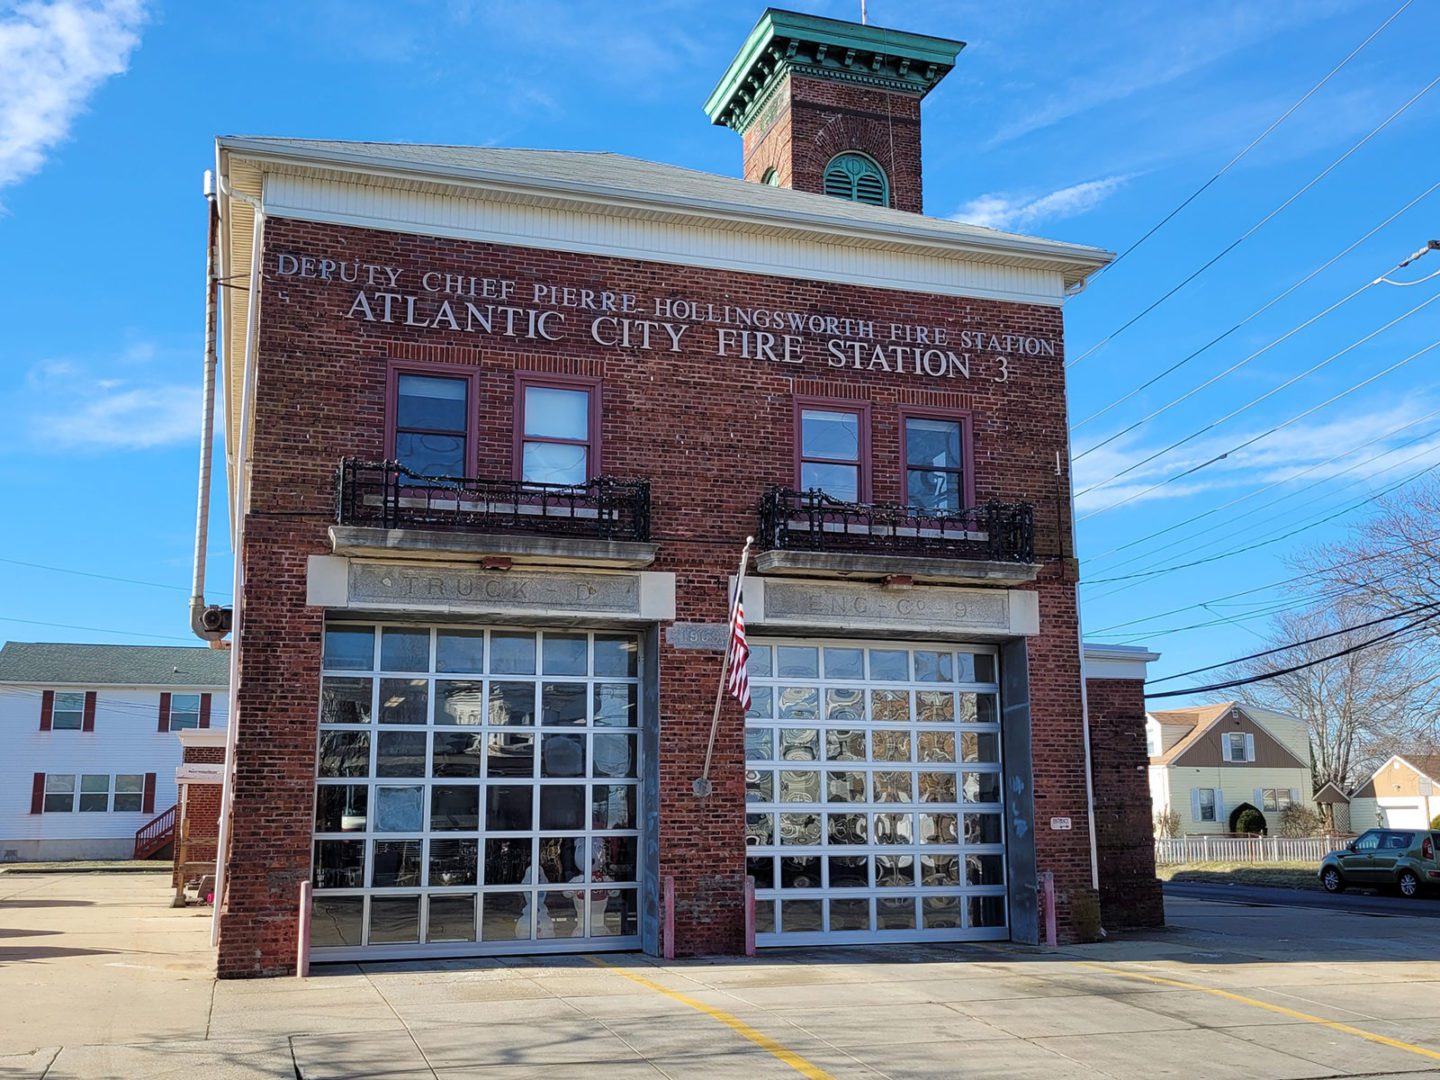 Fire Station 3 Atlantic City